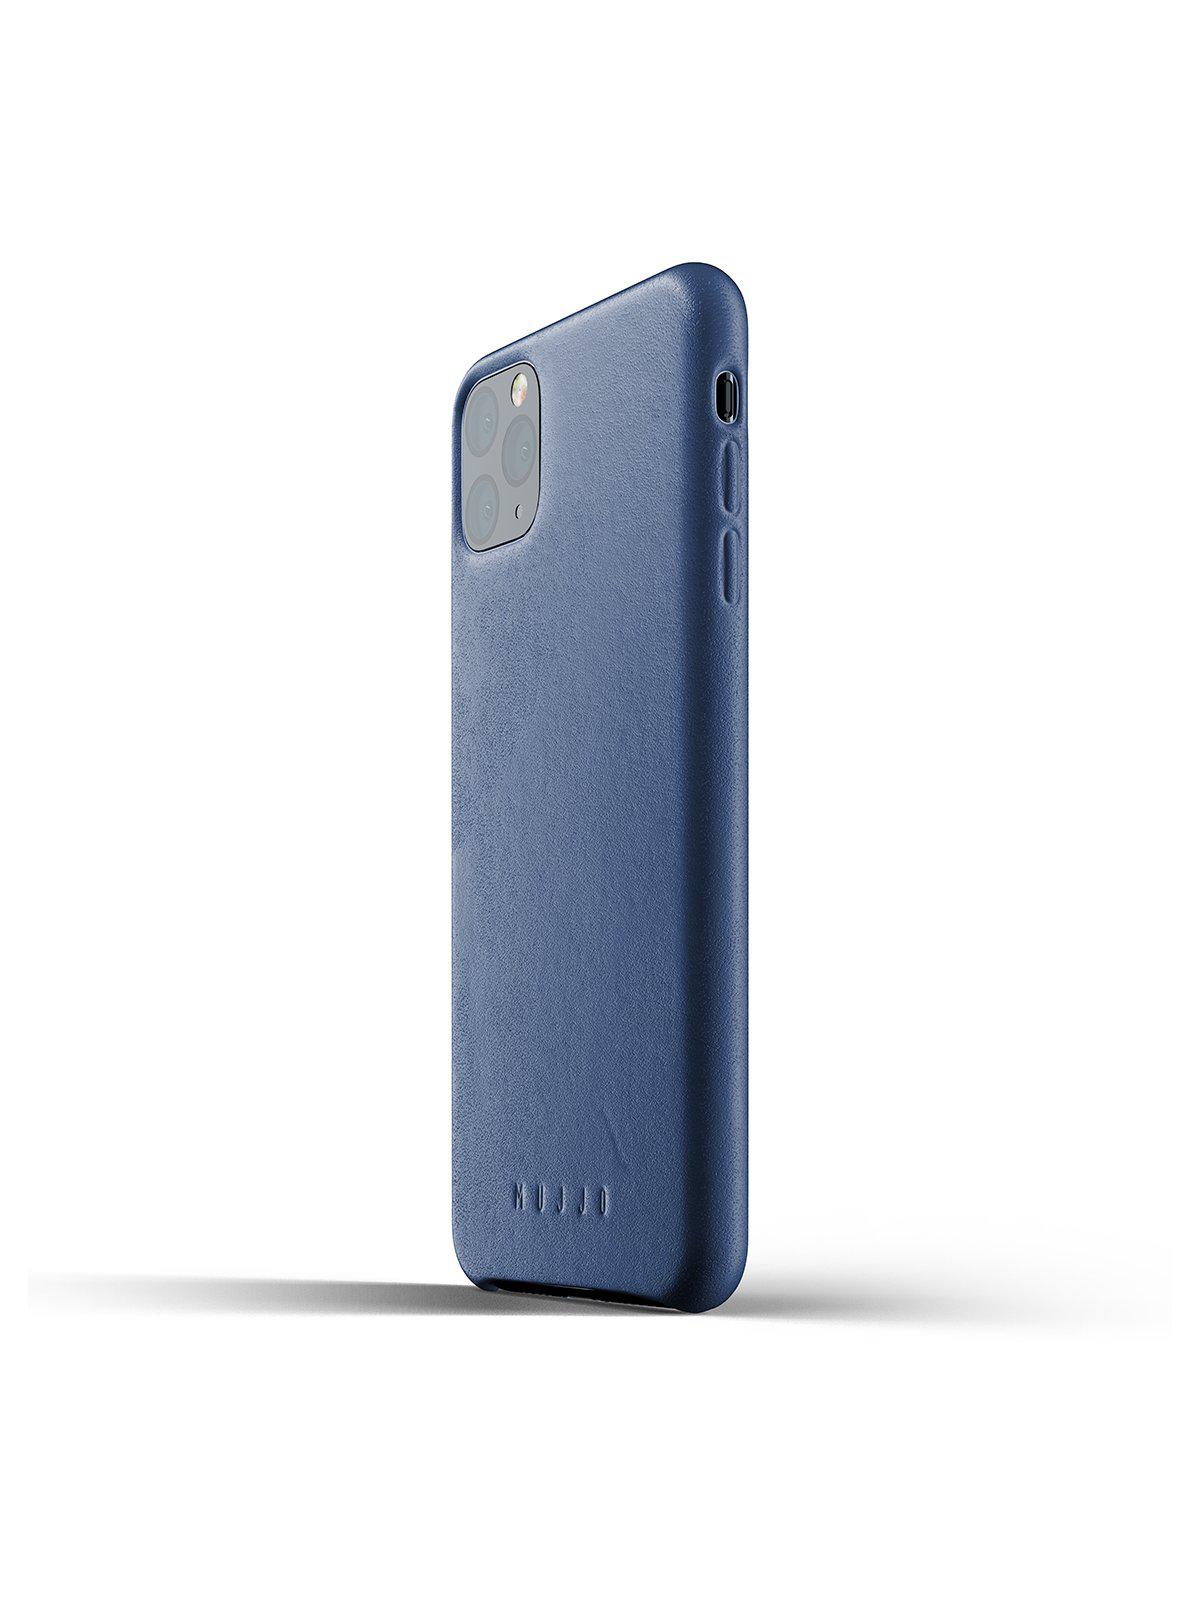 Mujjo Full Leather Case for iPhone 11 Pro Max Monaco Blue - MORE by Morello Indonesia